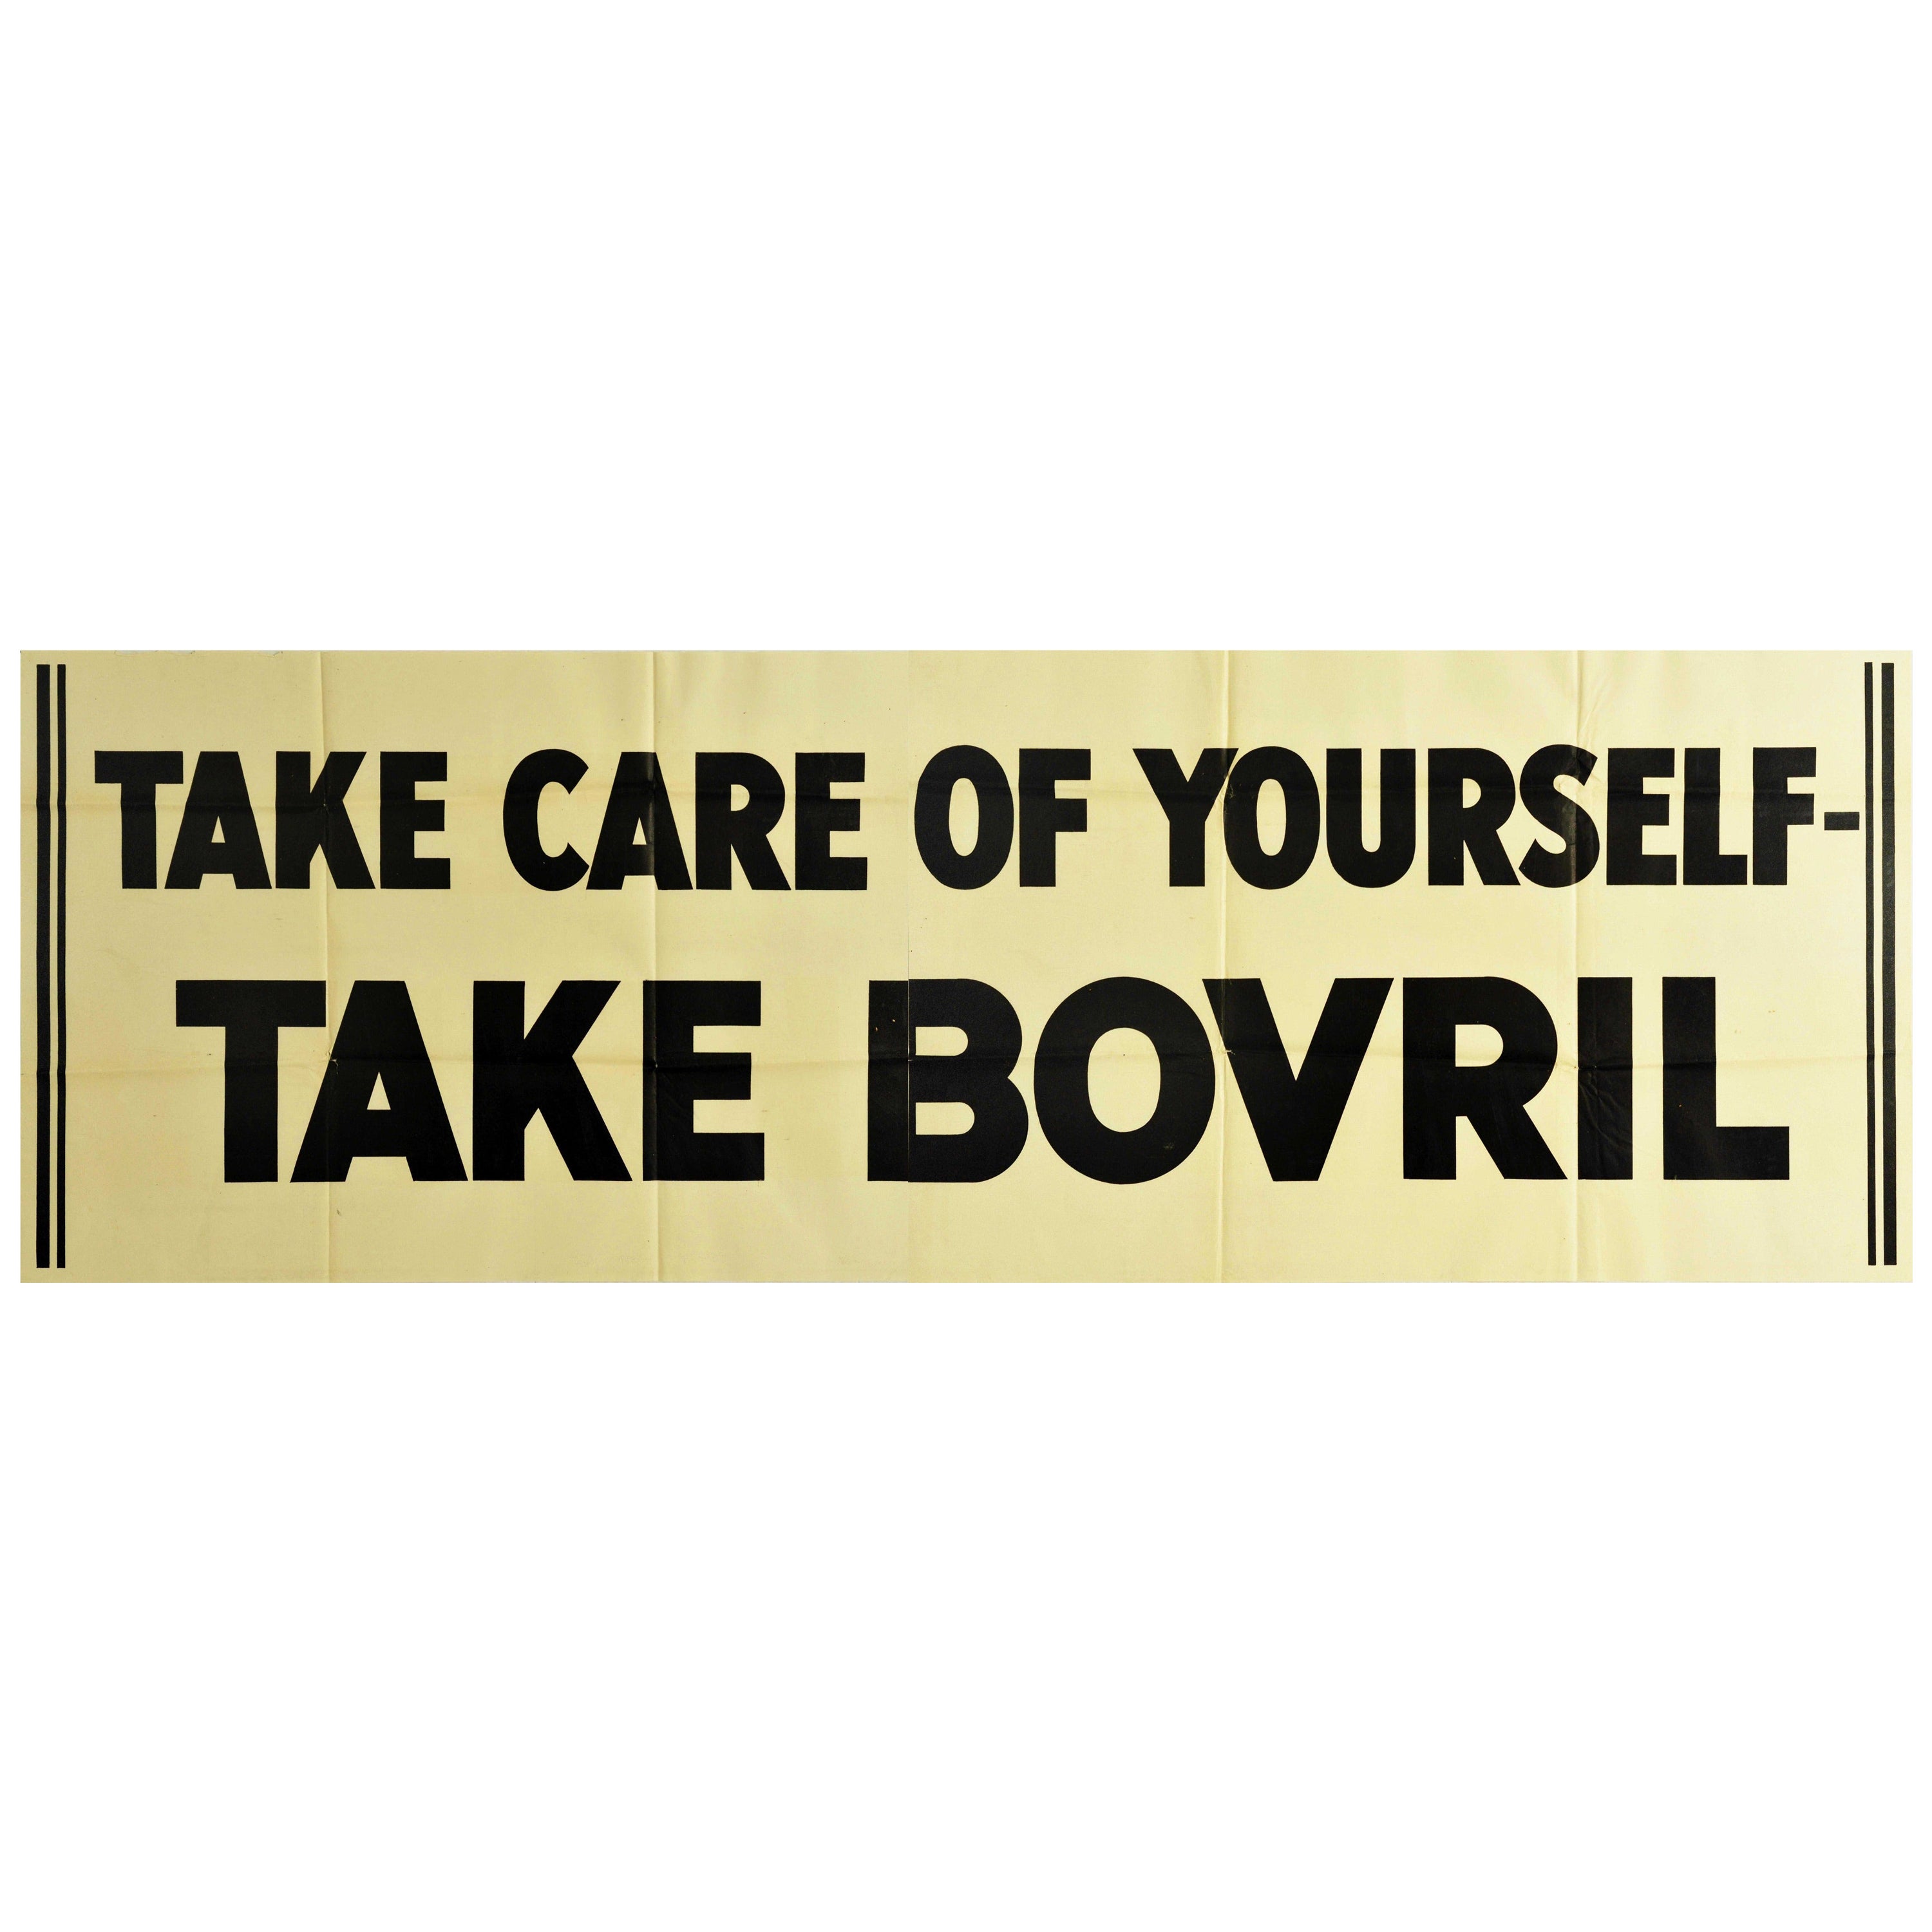 Original Vintage Poster Take Care Of Yourself Take Bovril Beef Soup Drink Food